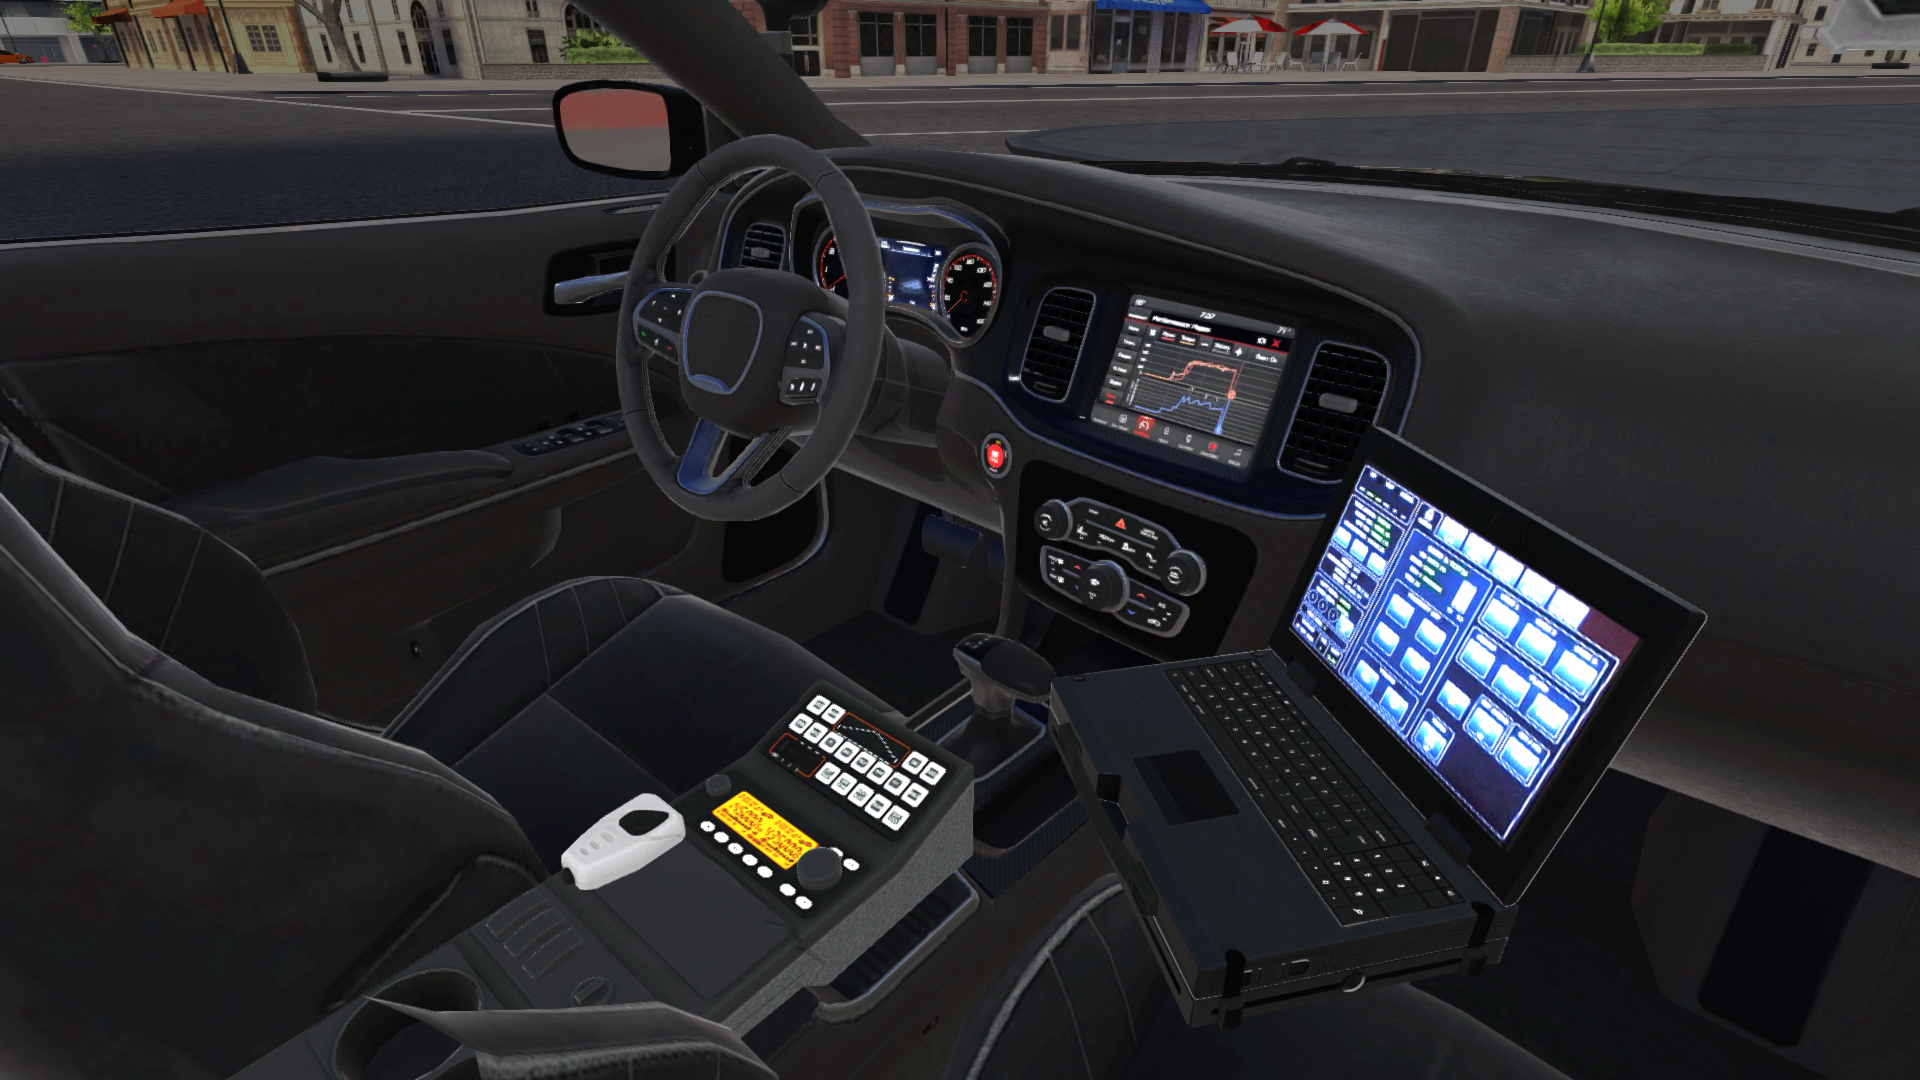 Police Vehicles Quad Simulator screenshot game